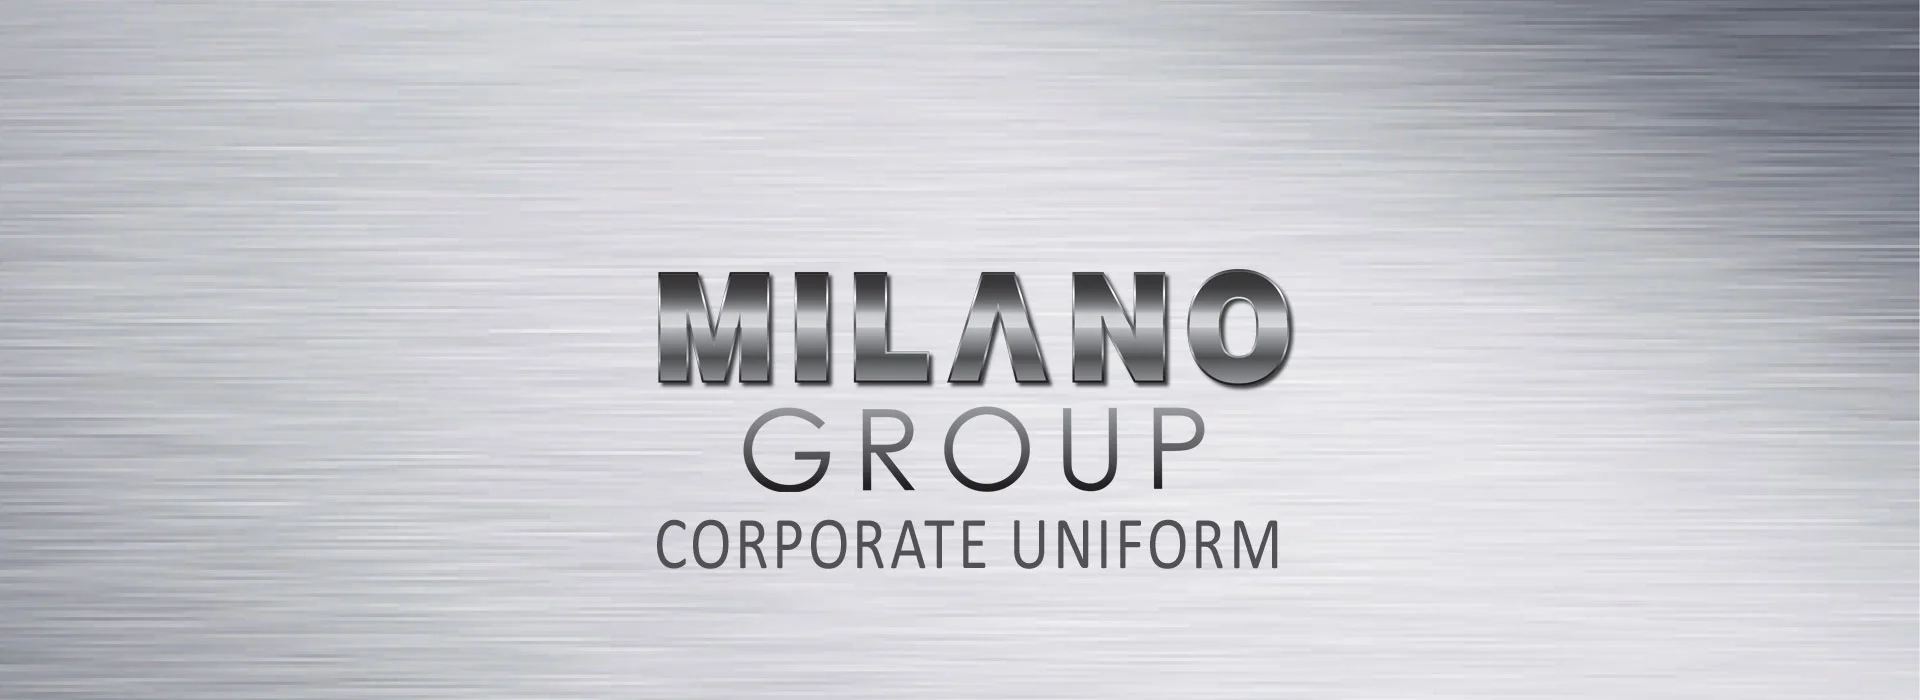 corporate uniforms milano group